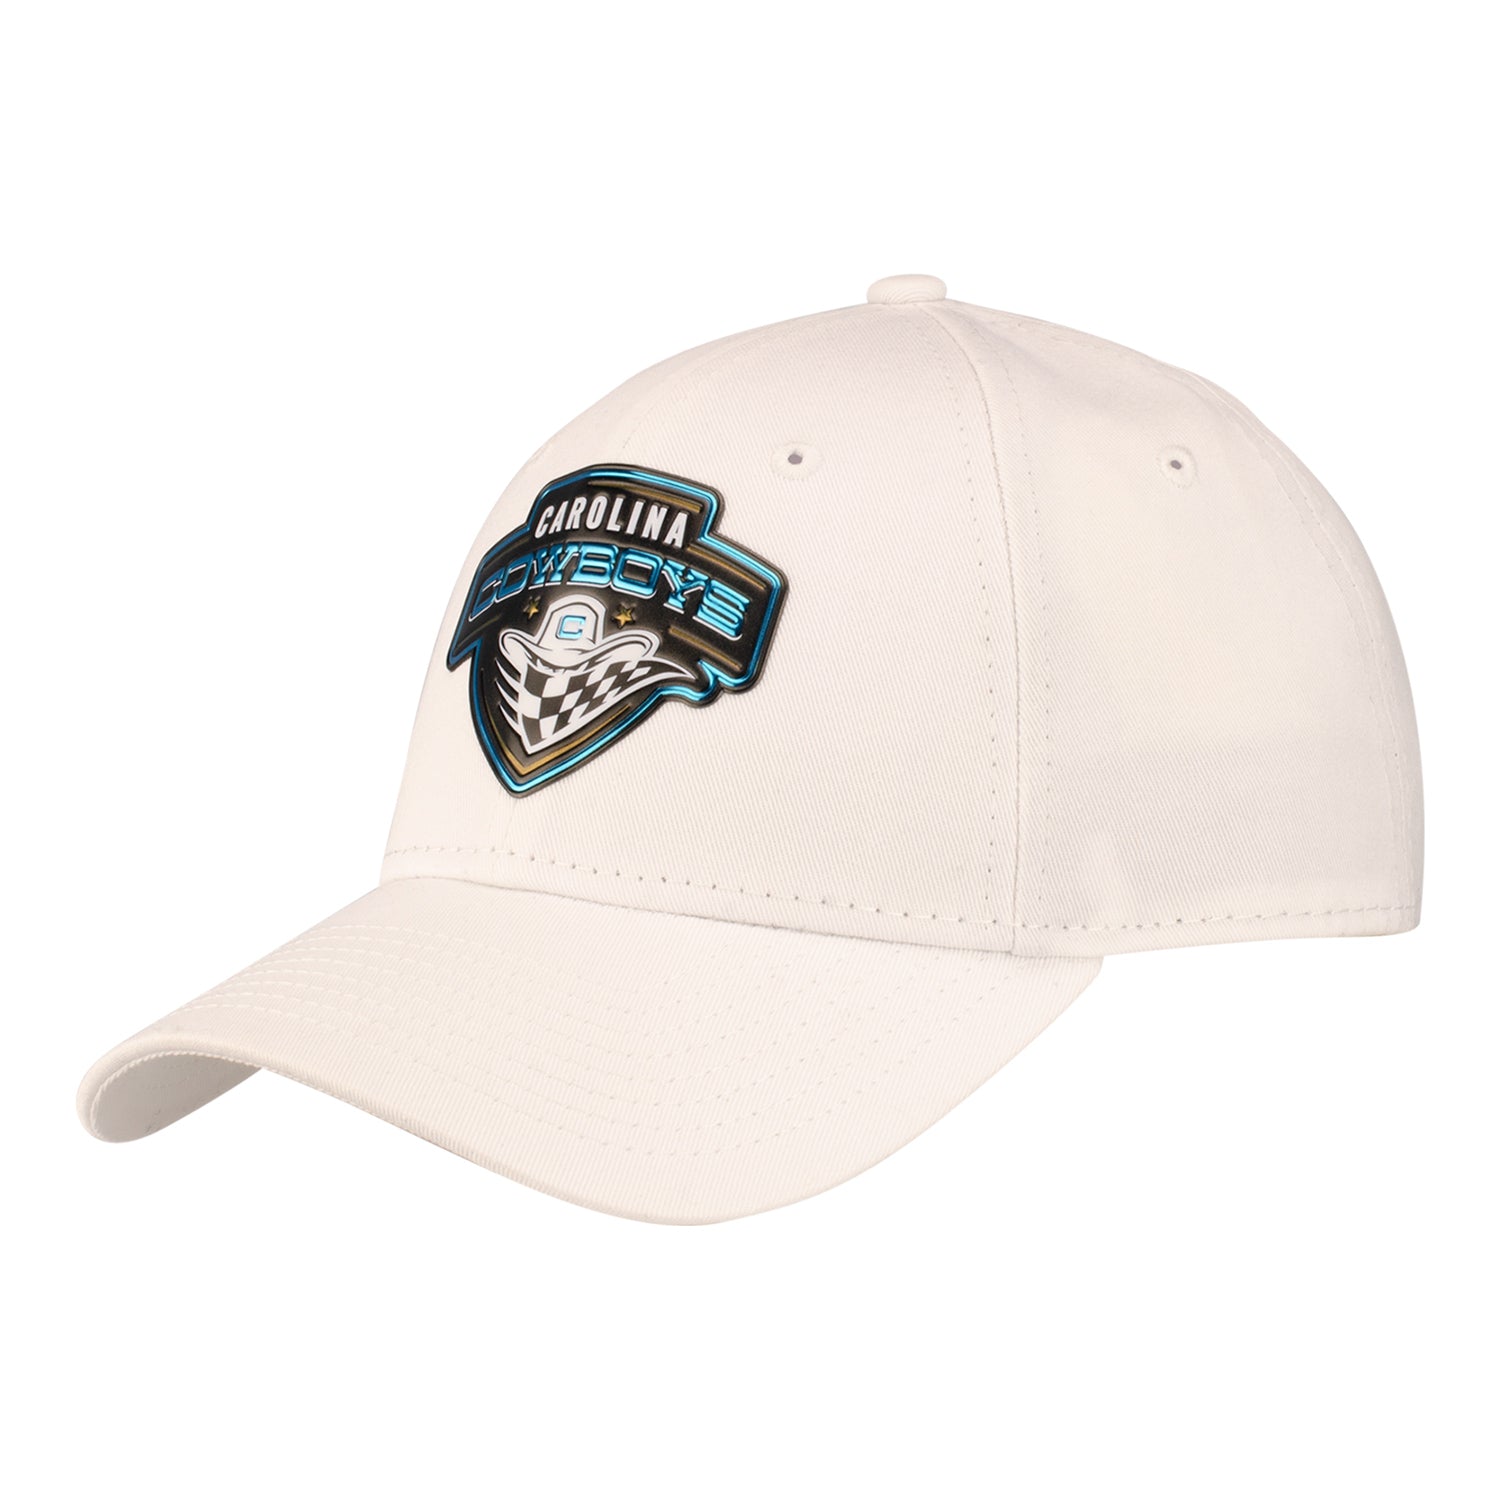 Anyone else with New Era could still make custom NHL hats? I miss